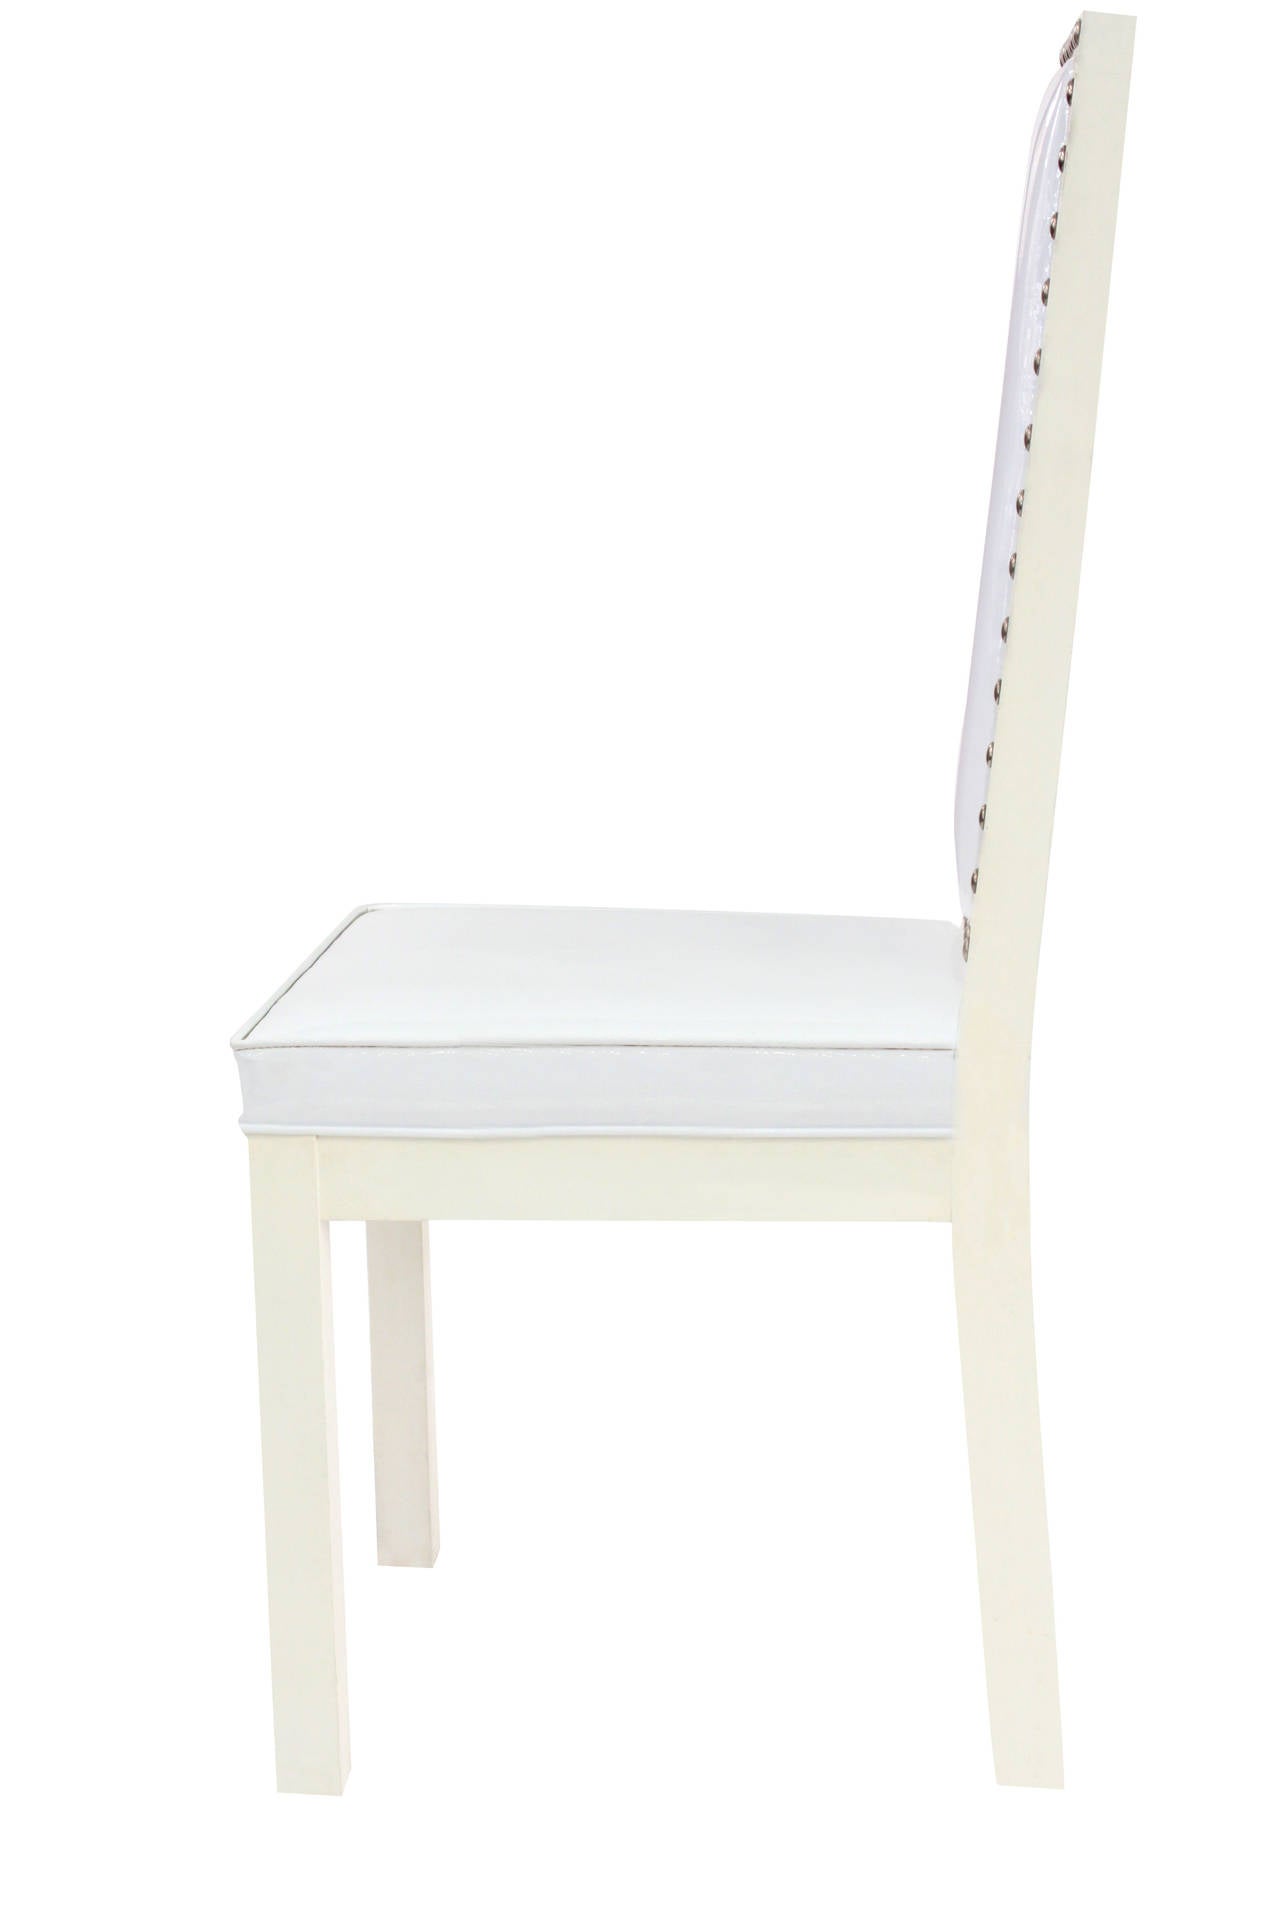 chair studs